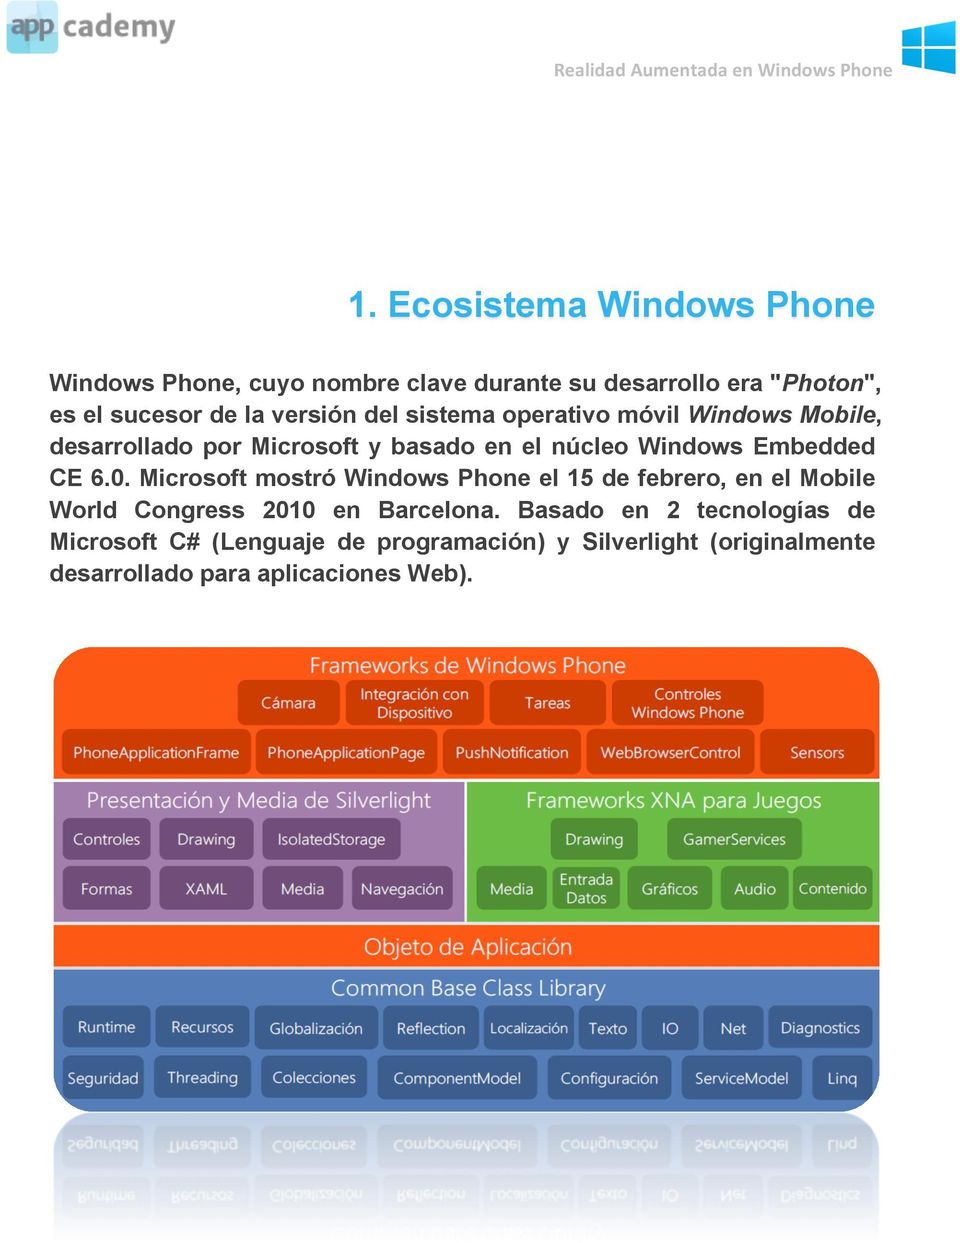 CE 6.0. Microsoft mostró Windows Phone el 15 de febrero, en el Mobile World Congress 2010 en Barcelona.